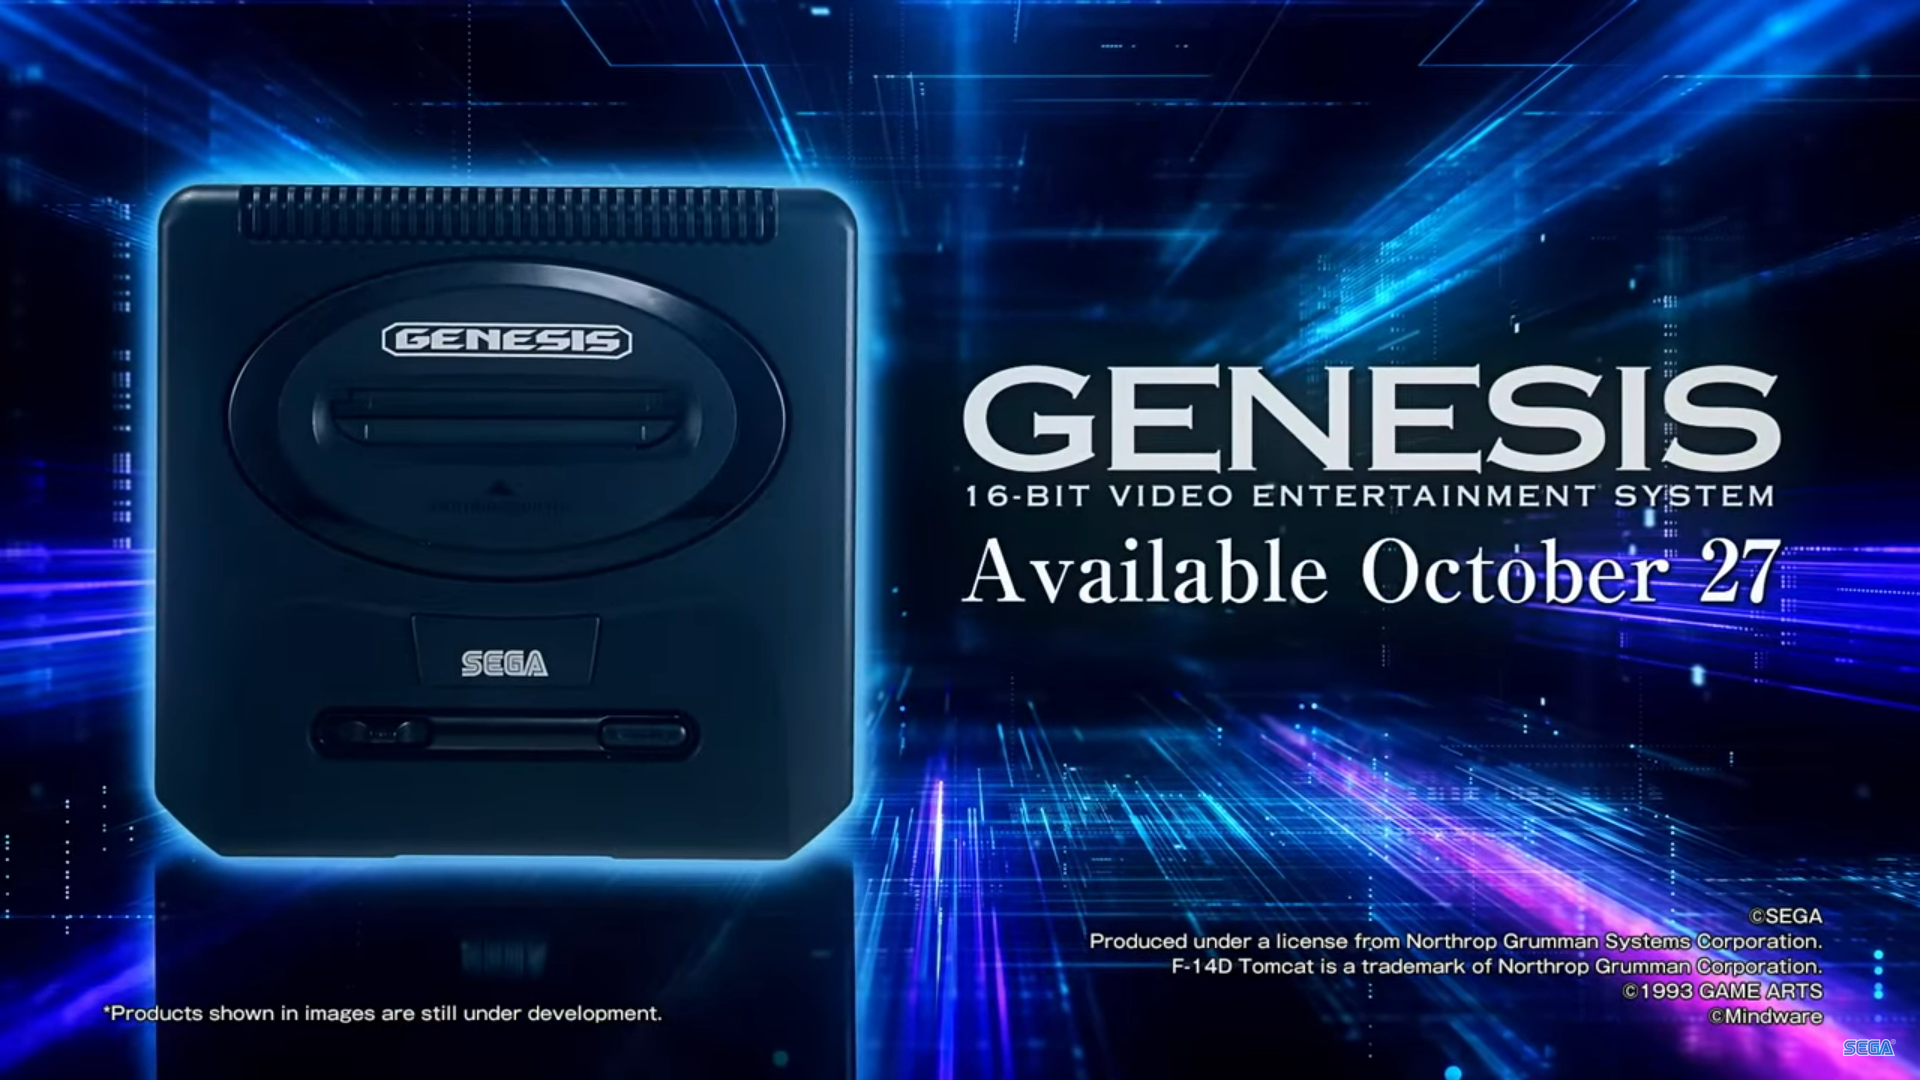 Sega Genesis Mini Is Headed To North America, Too